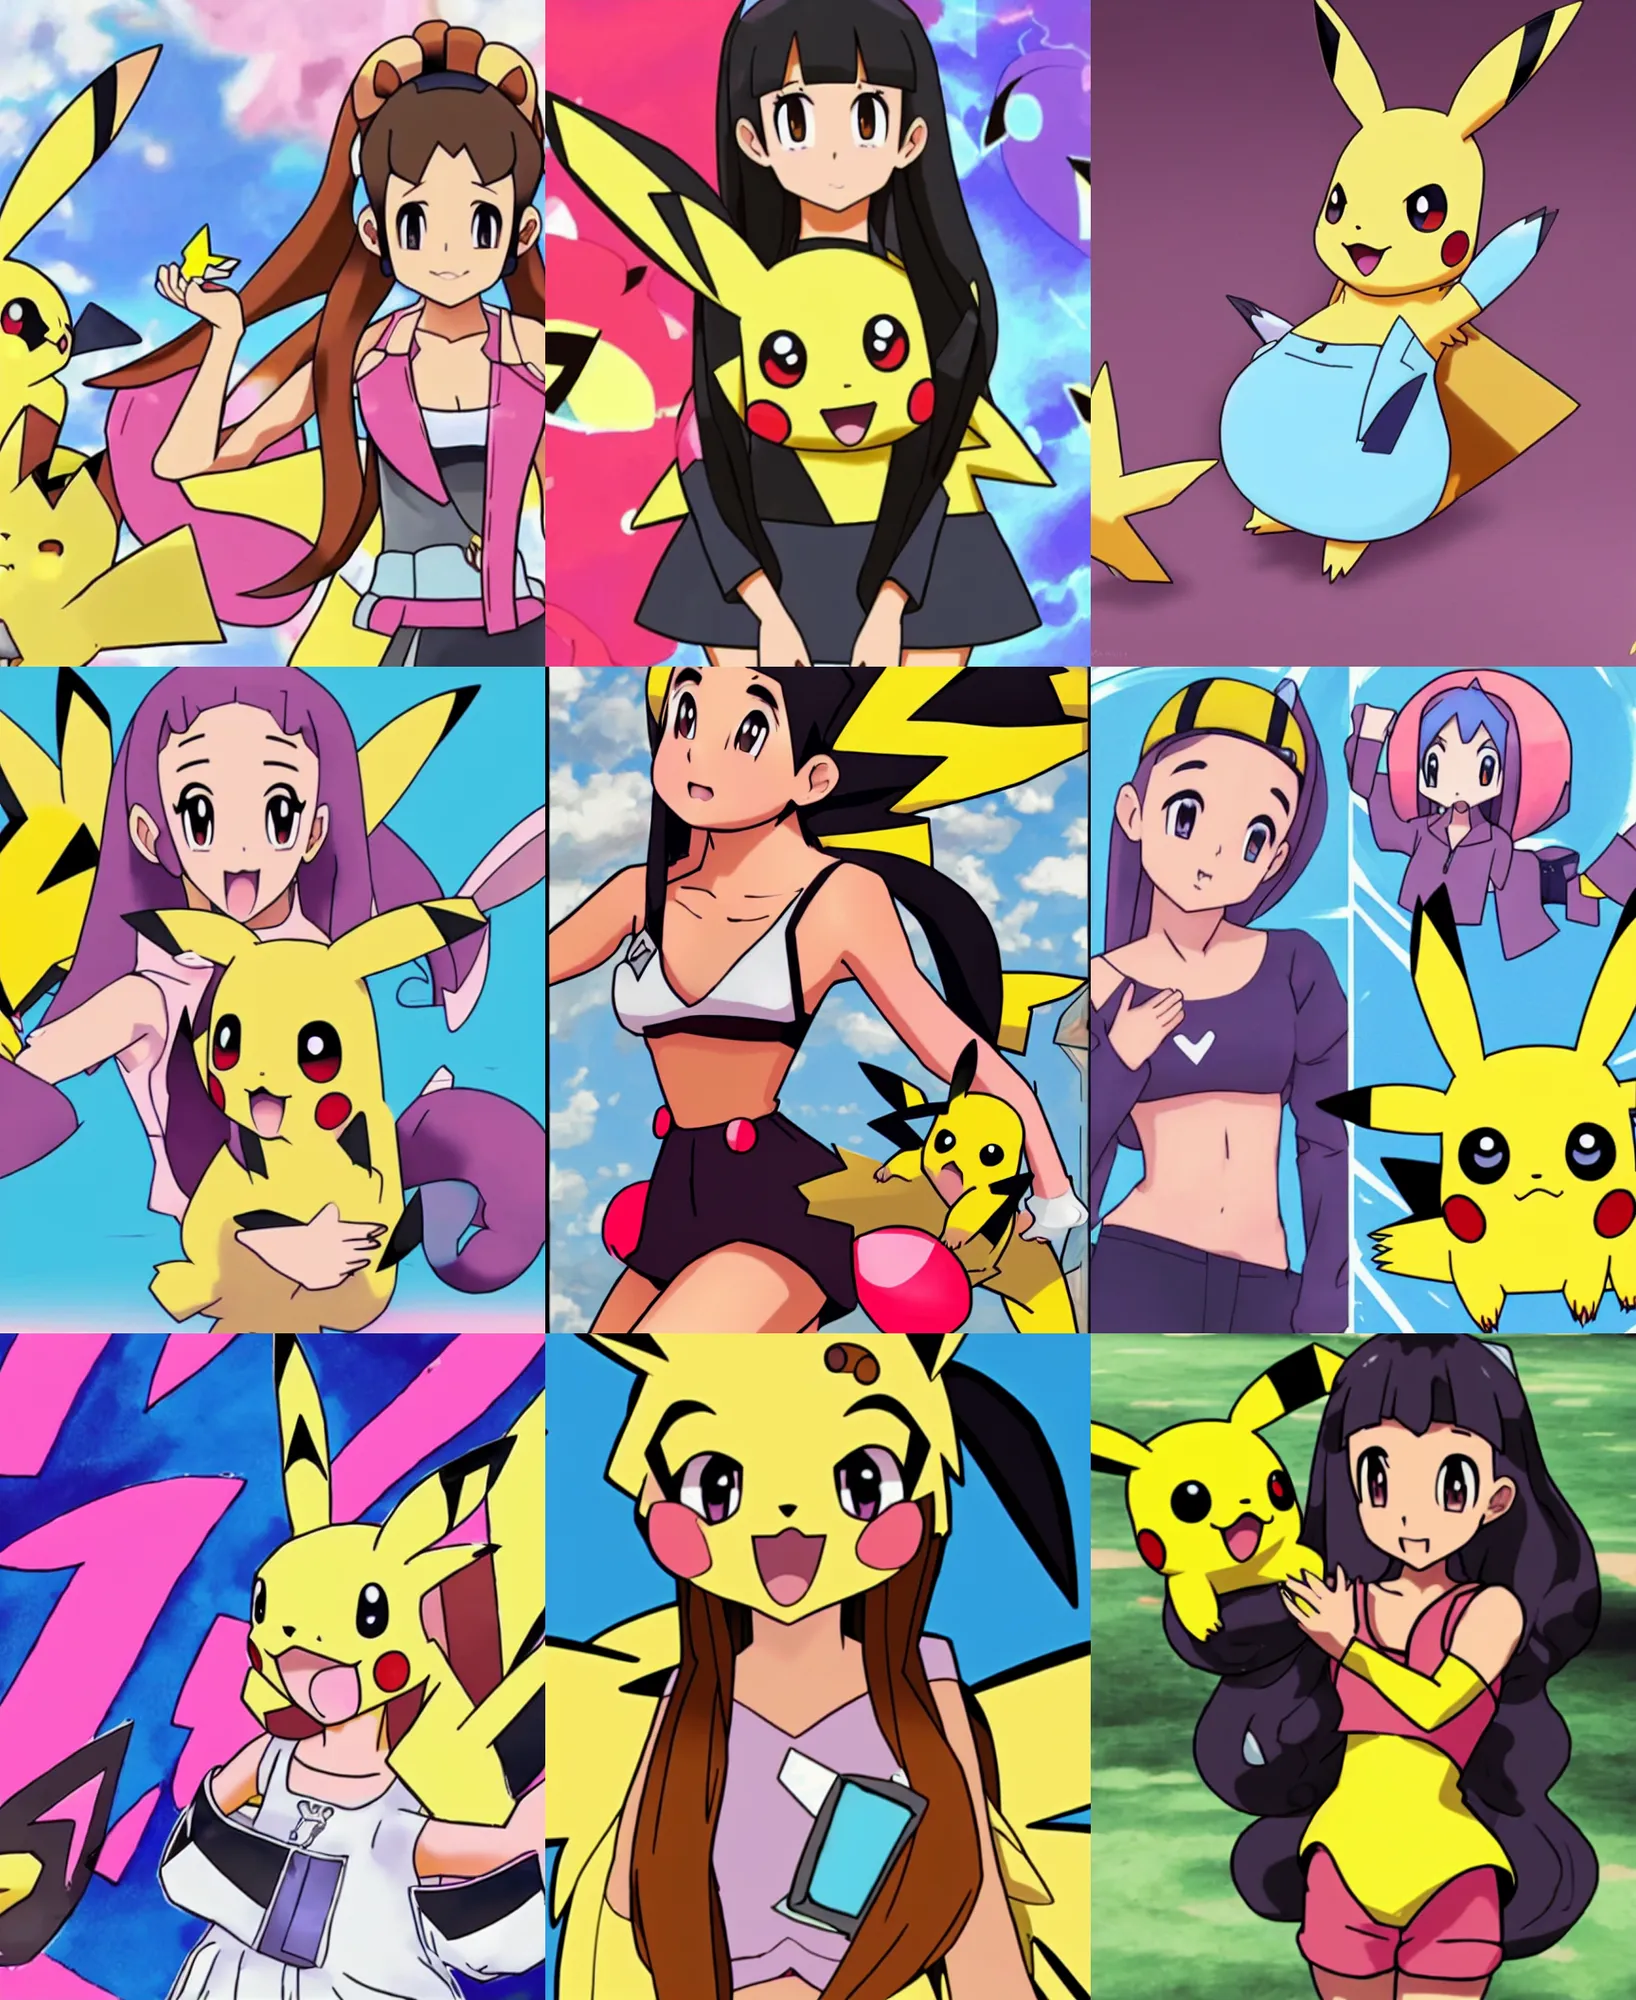 Prompt: Ariana Grande, Pokemon art style, catching a Pikachu